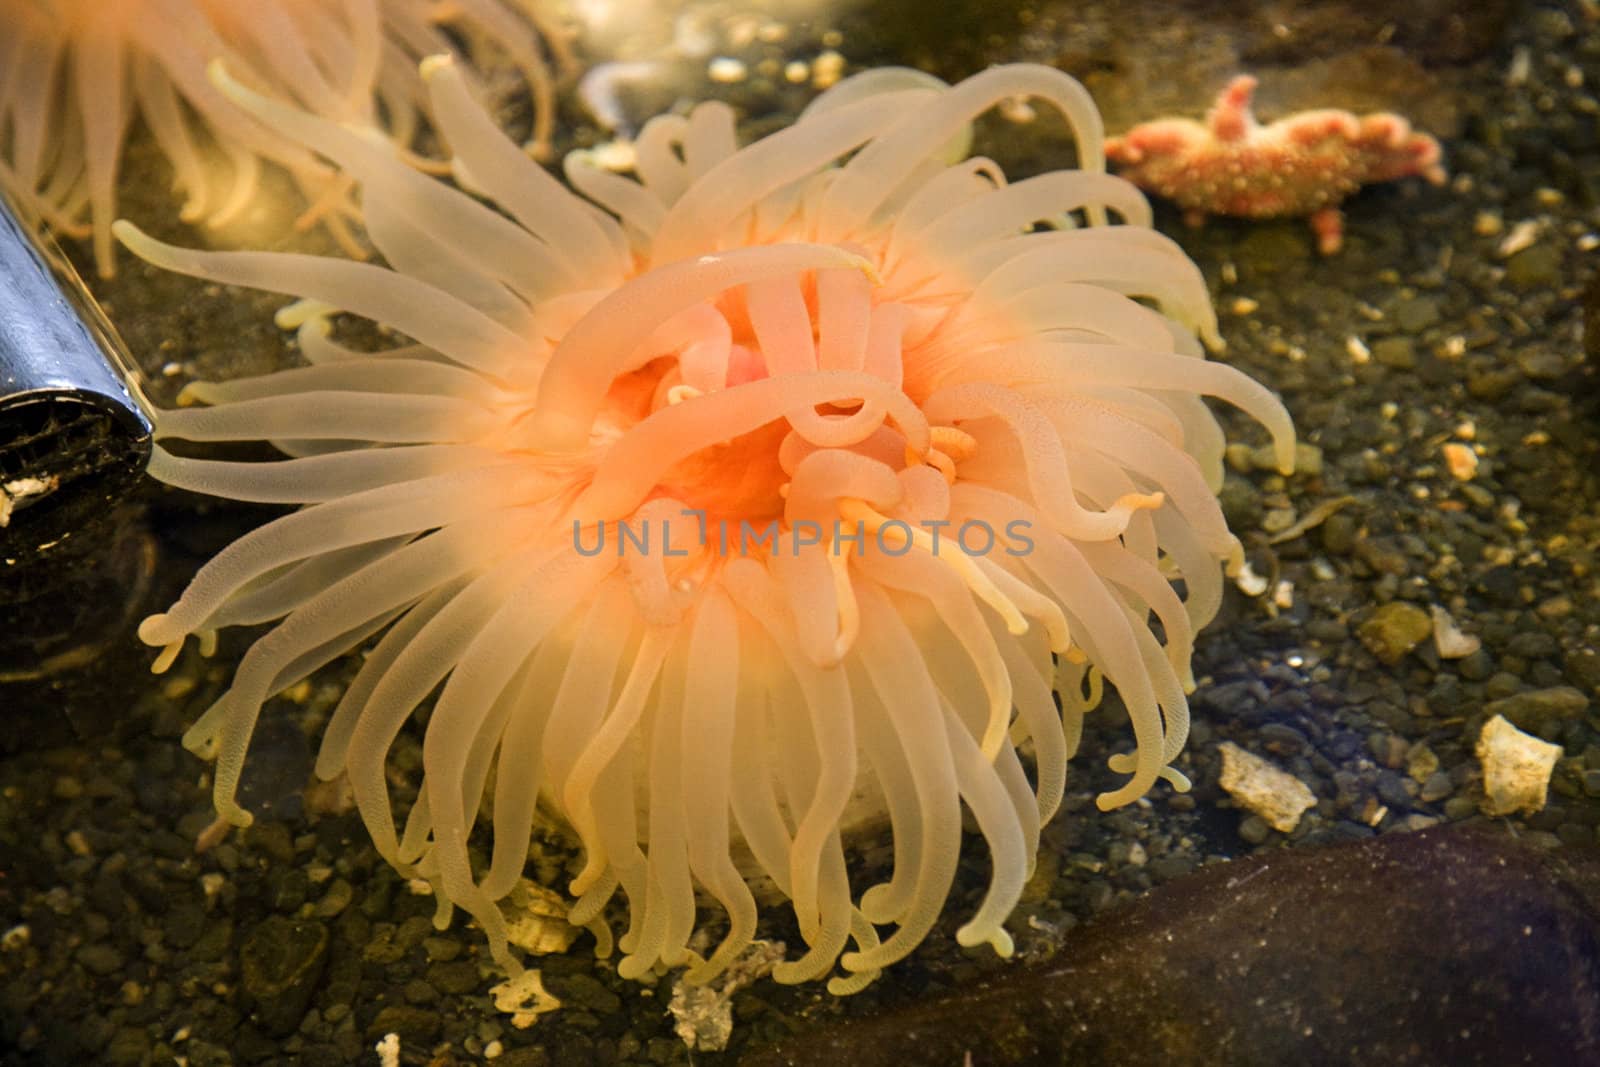 Orange Sea anemone, actiniaria, Alaska, pink, tentacles

